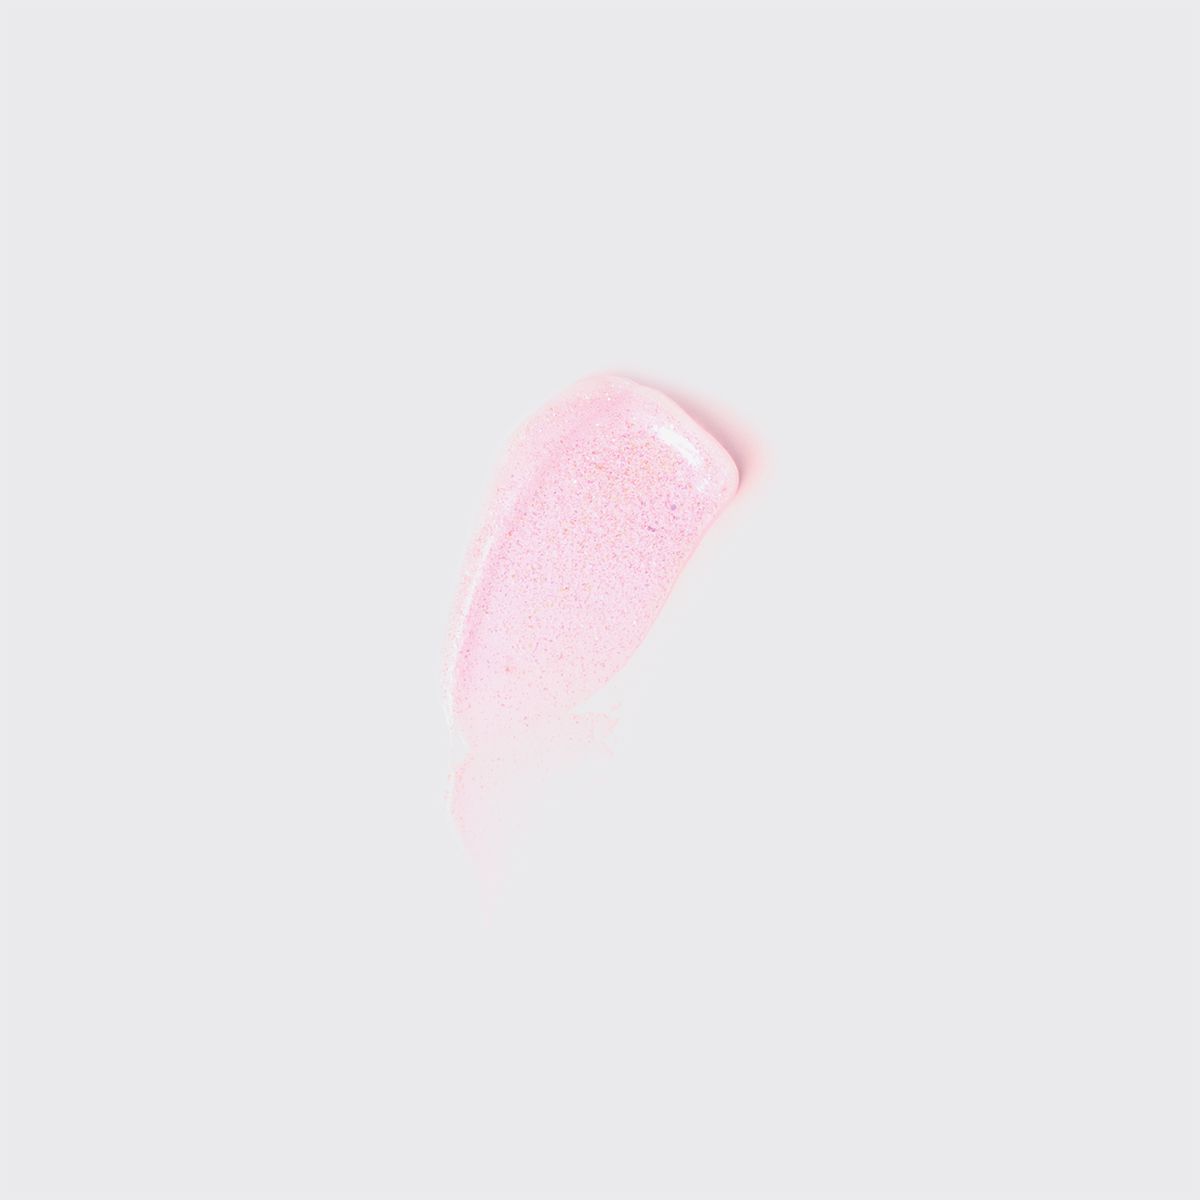 Vivienne Sabo - Lip Gloss Aurora Borealis 02